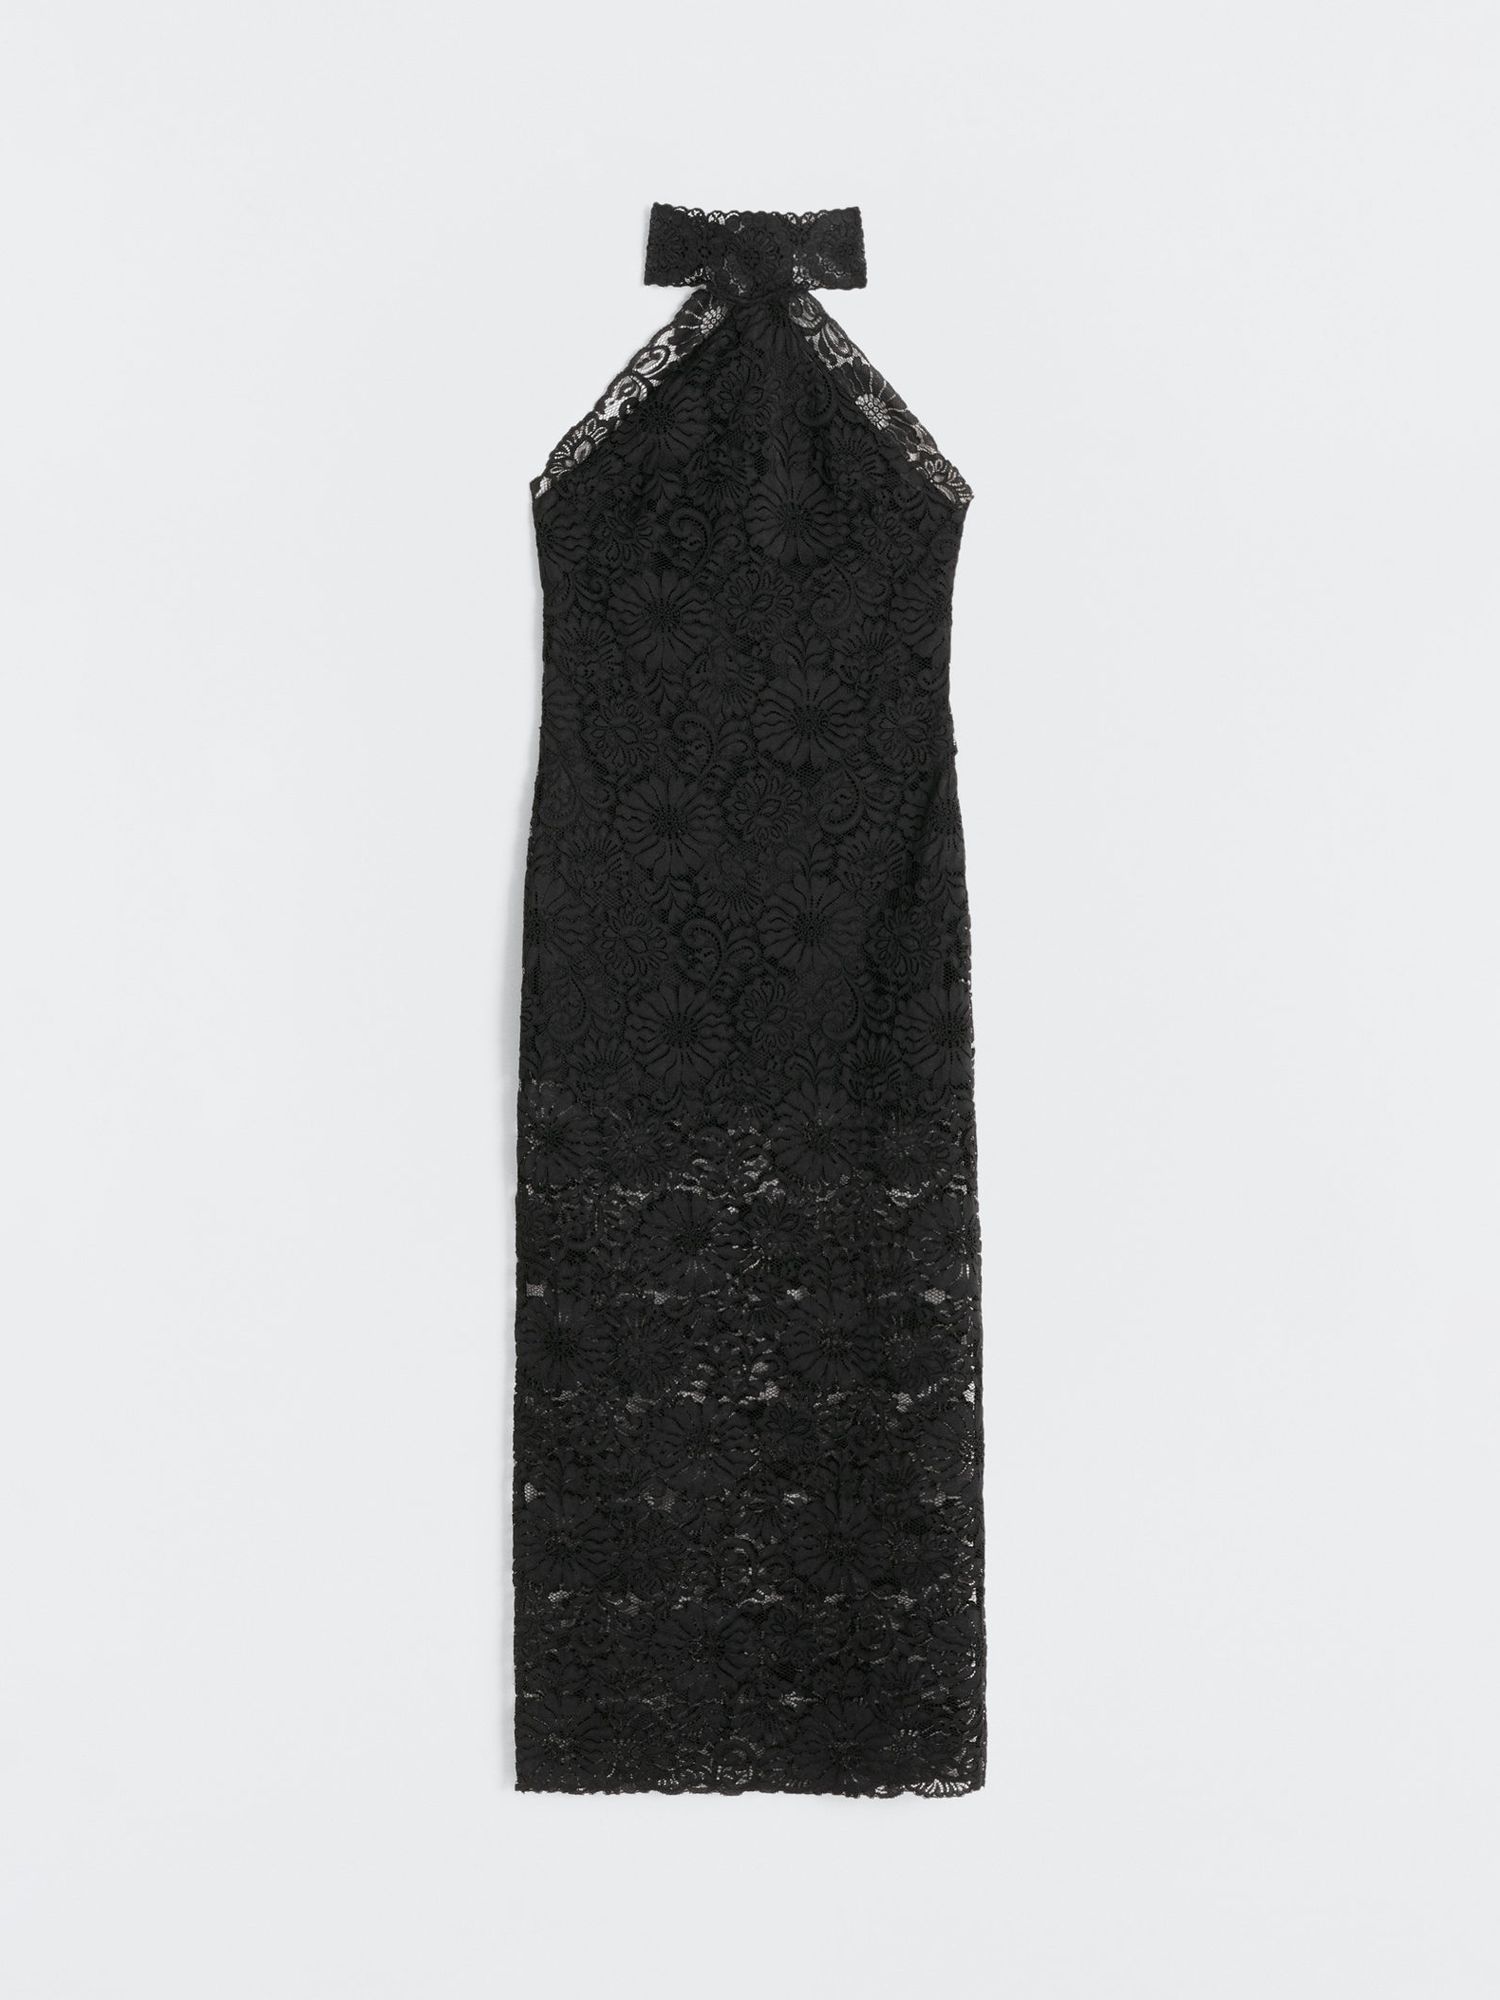 Mango June Halter Neck Lace Dress, Black, 6